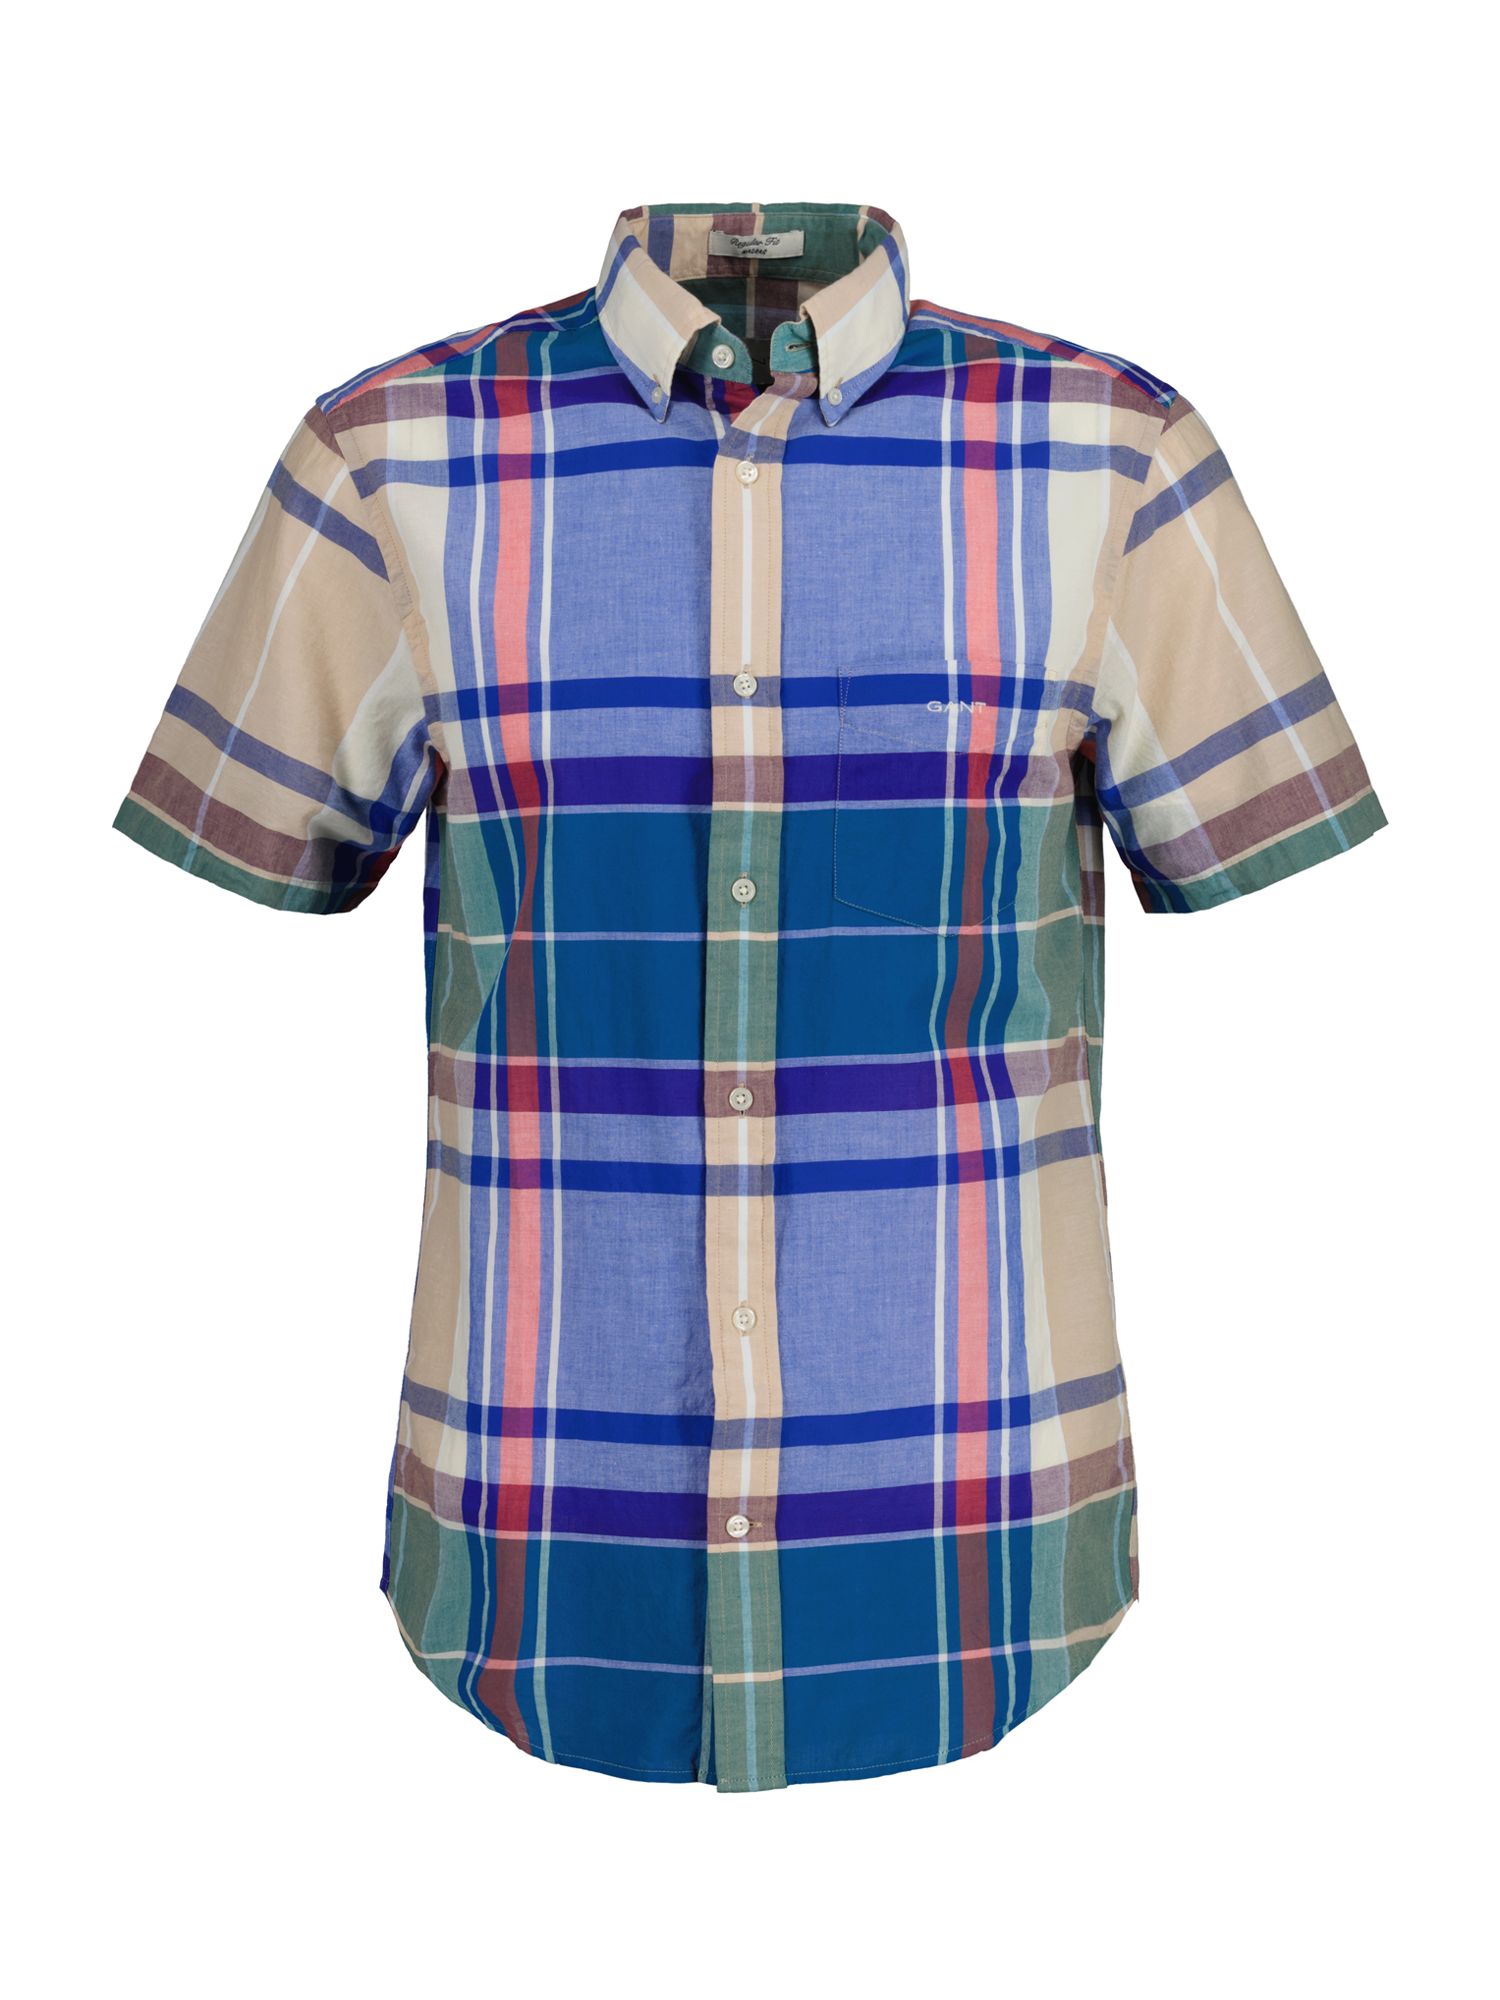 Buy GANT Madras Short Sleeve Shirt, Blue/Multi Online at johnlewis.com